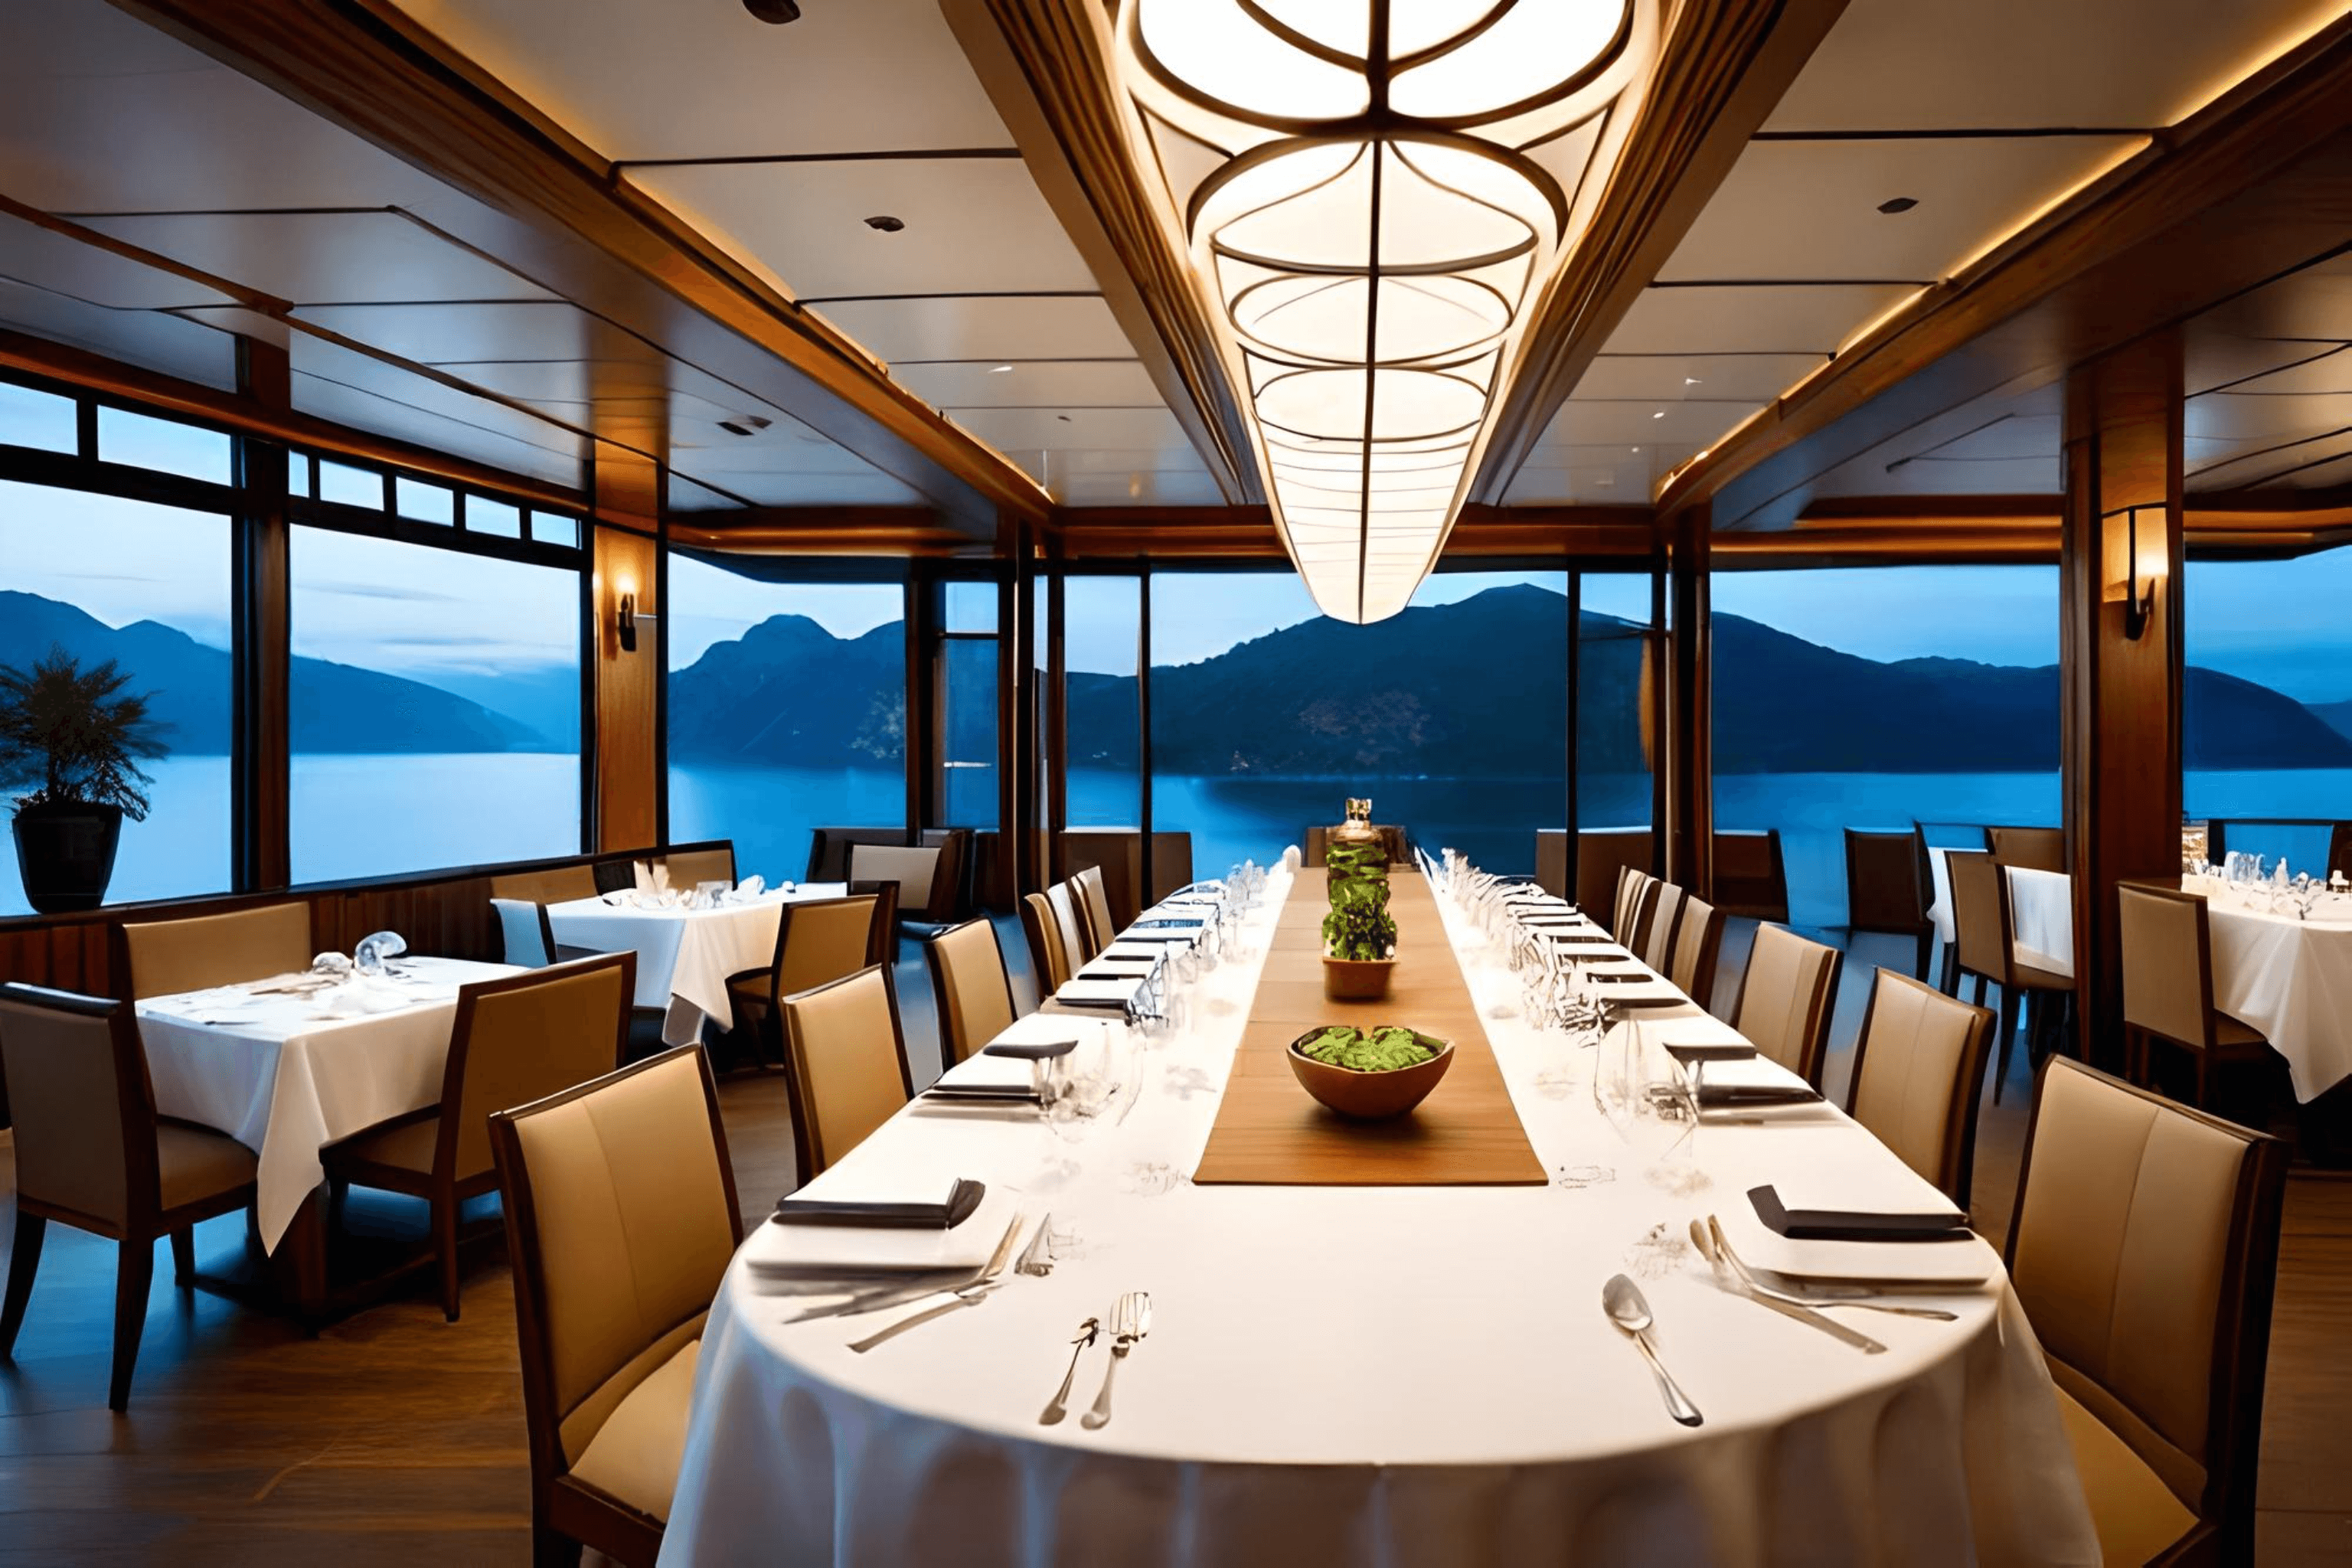 Cruise ship empty dining room